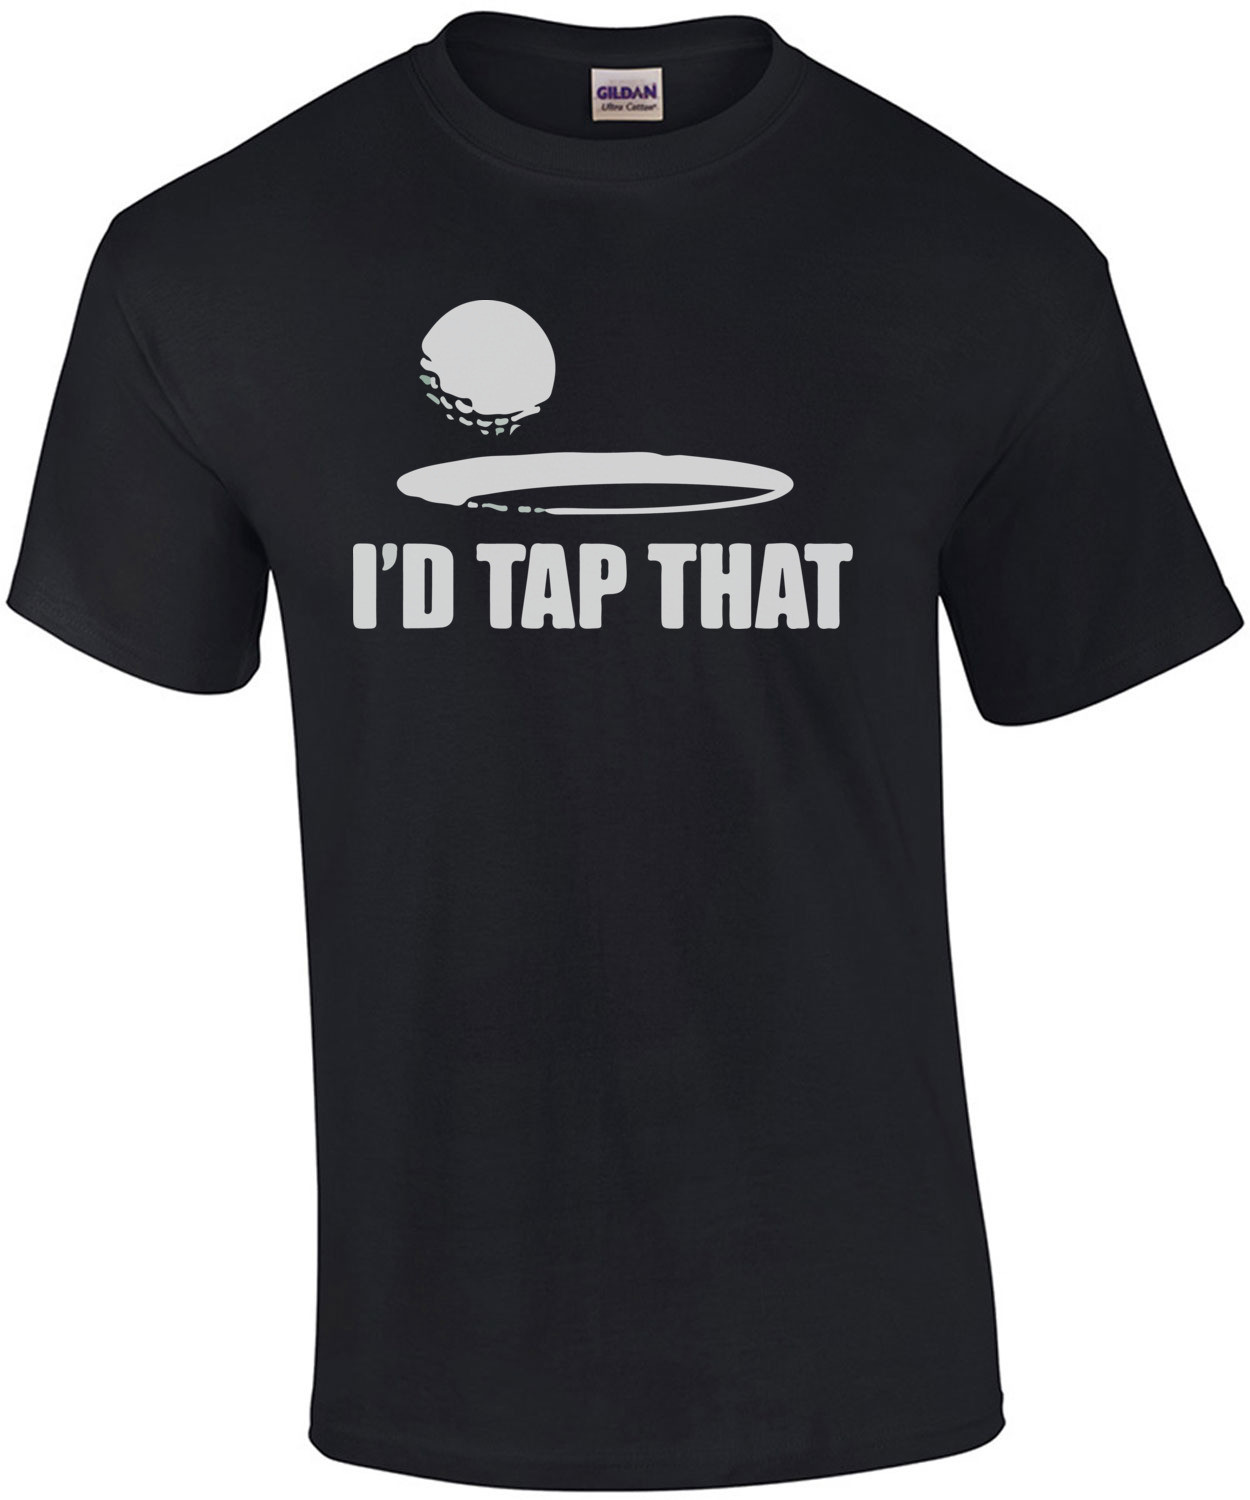 I'd Tap That - Golf